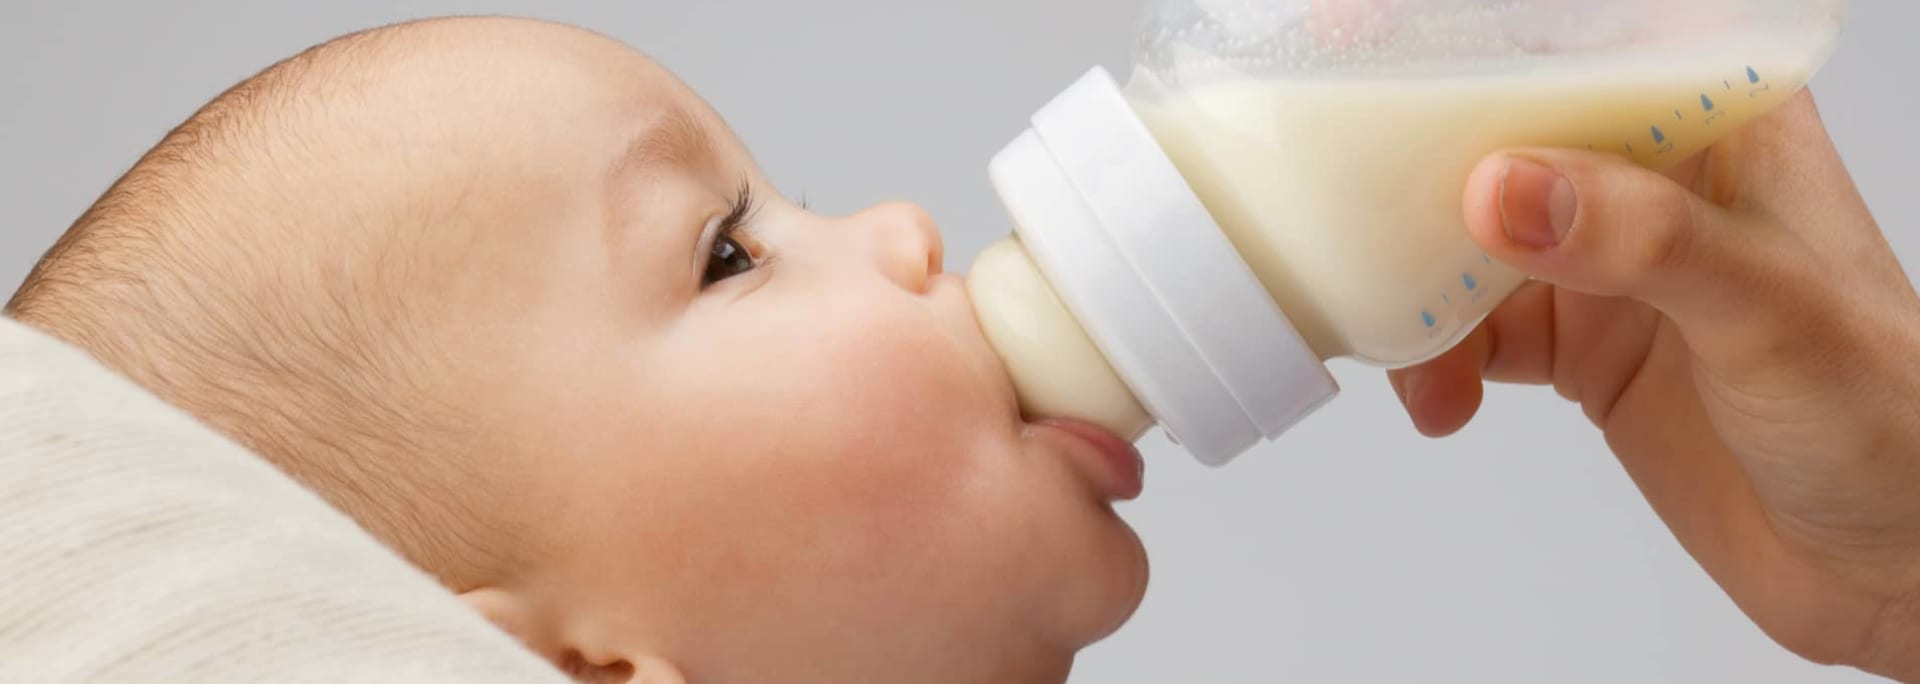 Cómo elegir la leche de fórmula para mi bebé